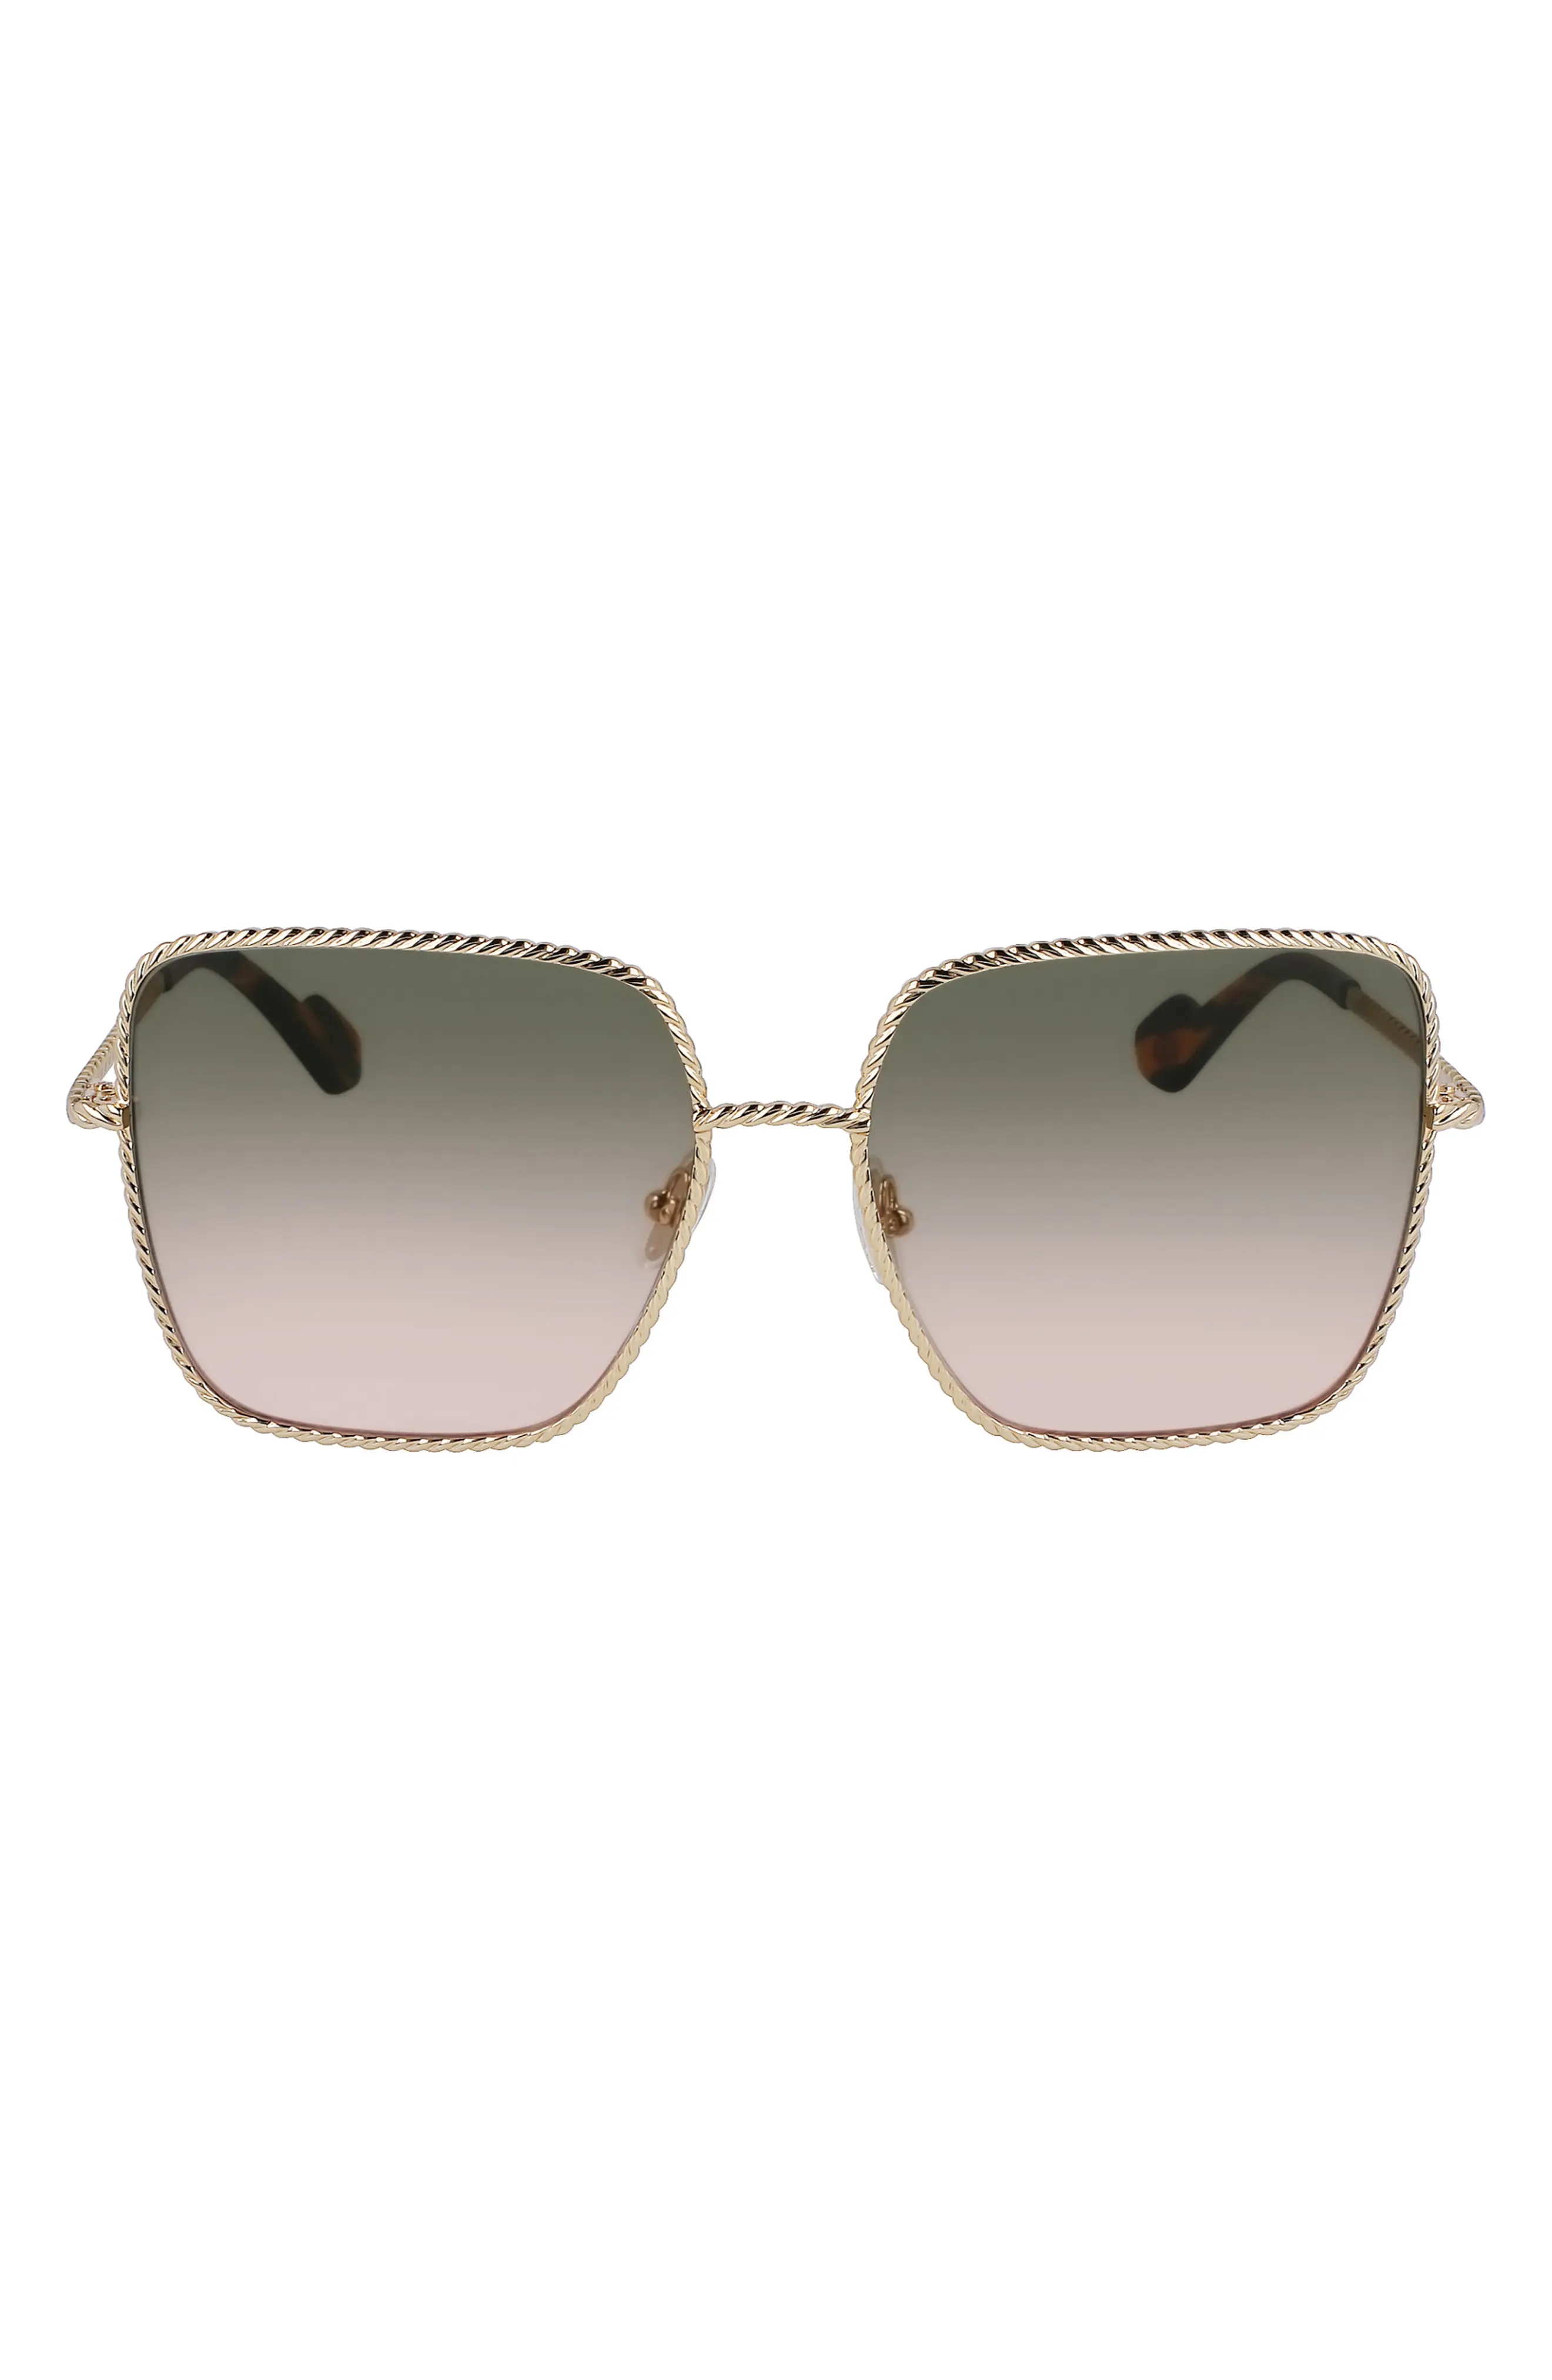 Babe 59mm Gradient Square Sunglasses in Gold/Gradient Green Peach - 1